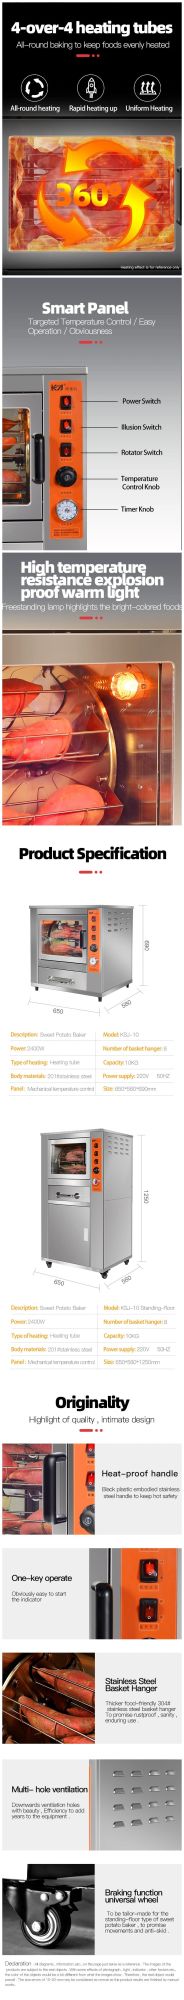 Ksj-10 2021 New Samll Size Portable Sweet Potato Taro Oven Corn Roaster